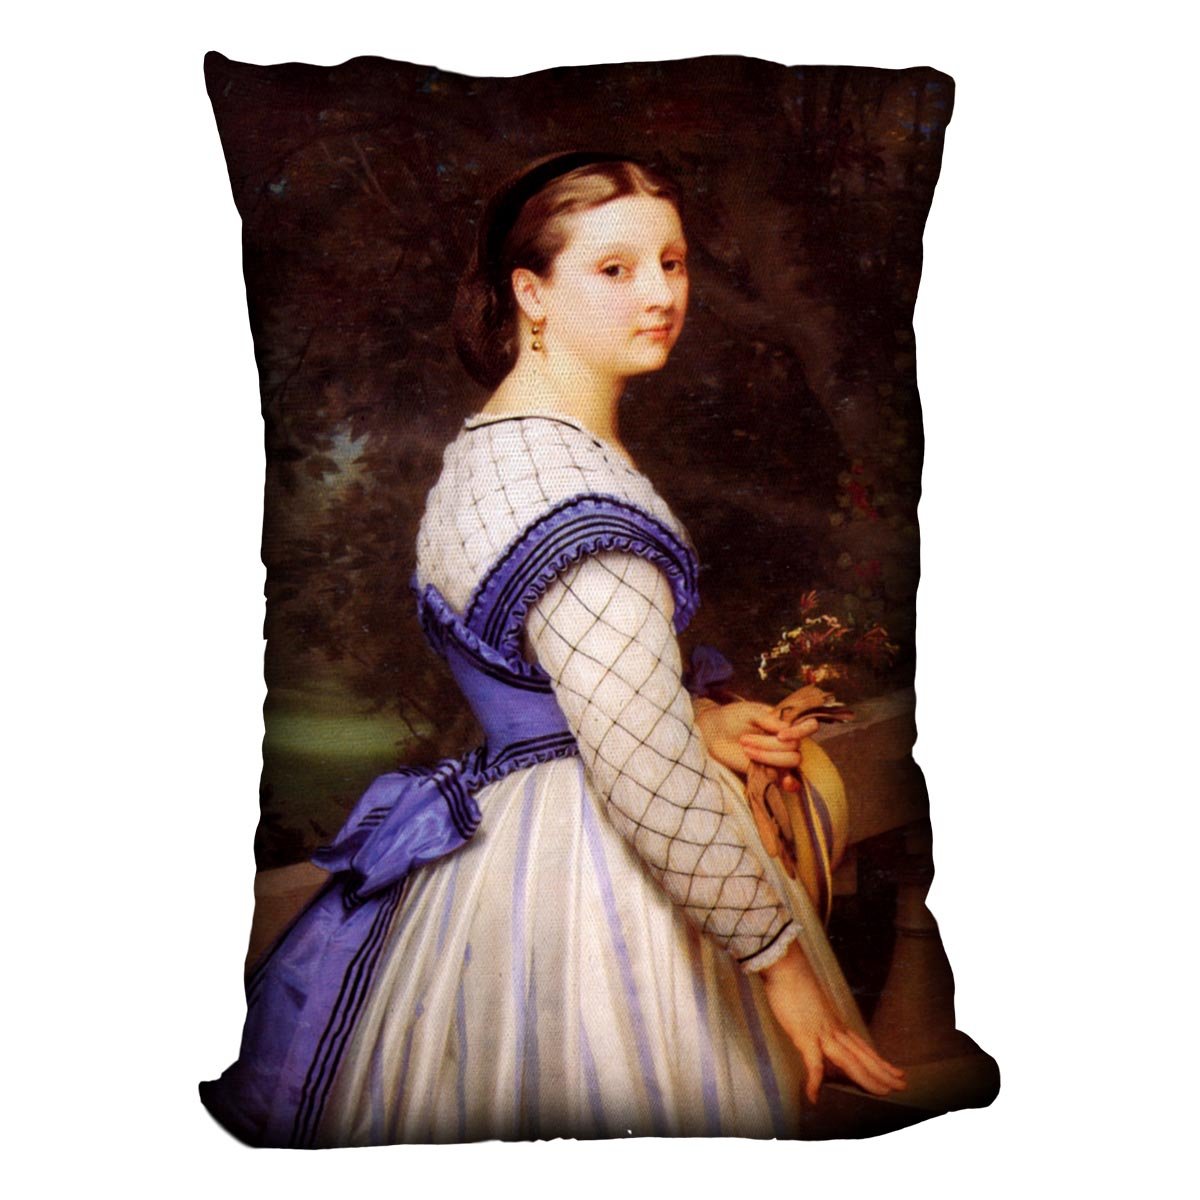 The Countess de Montholon By Bouguereau Throw Pillow